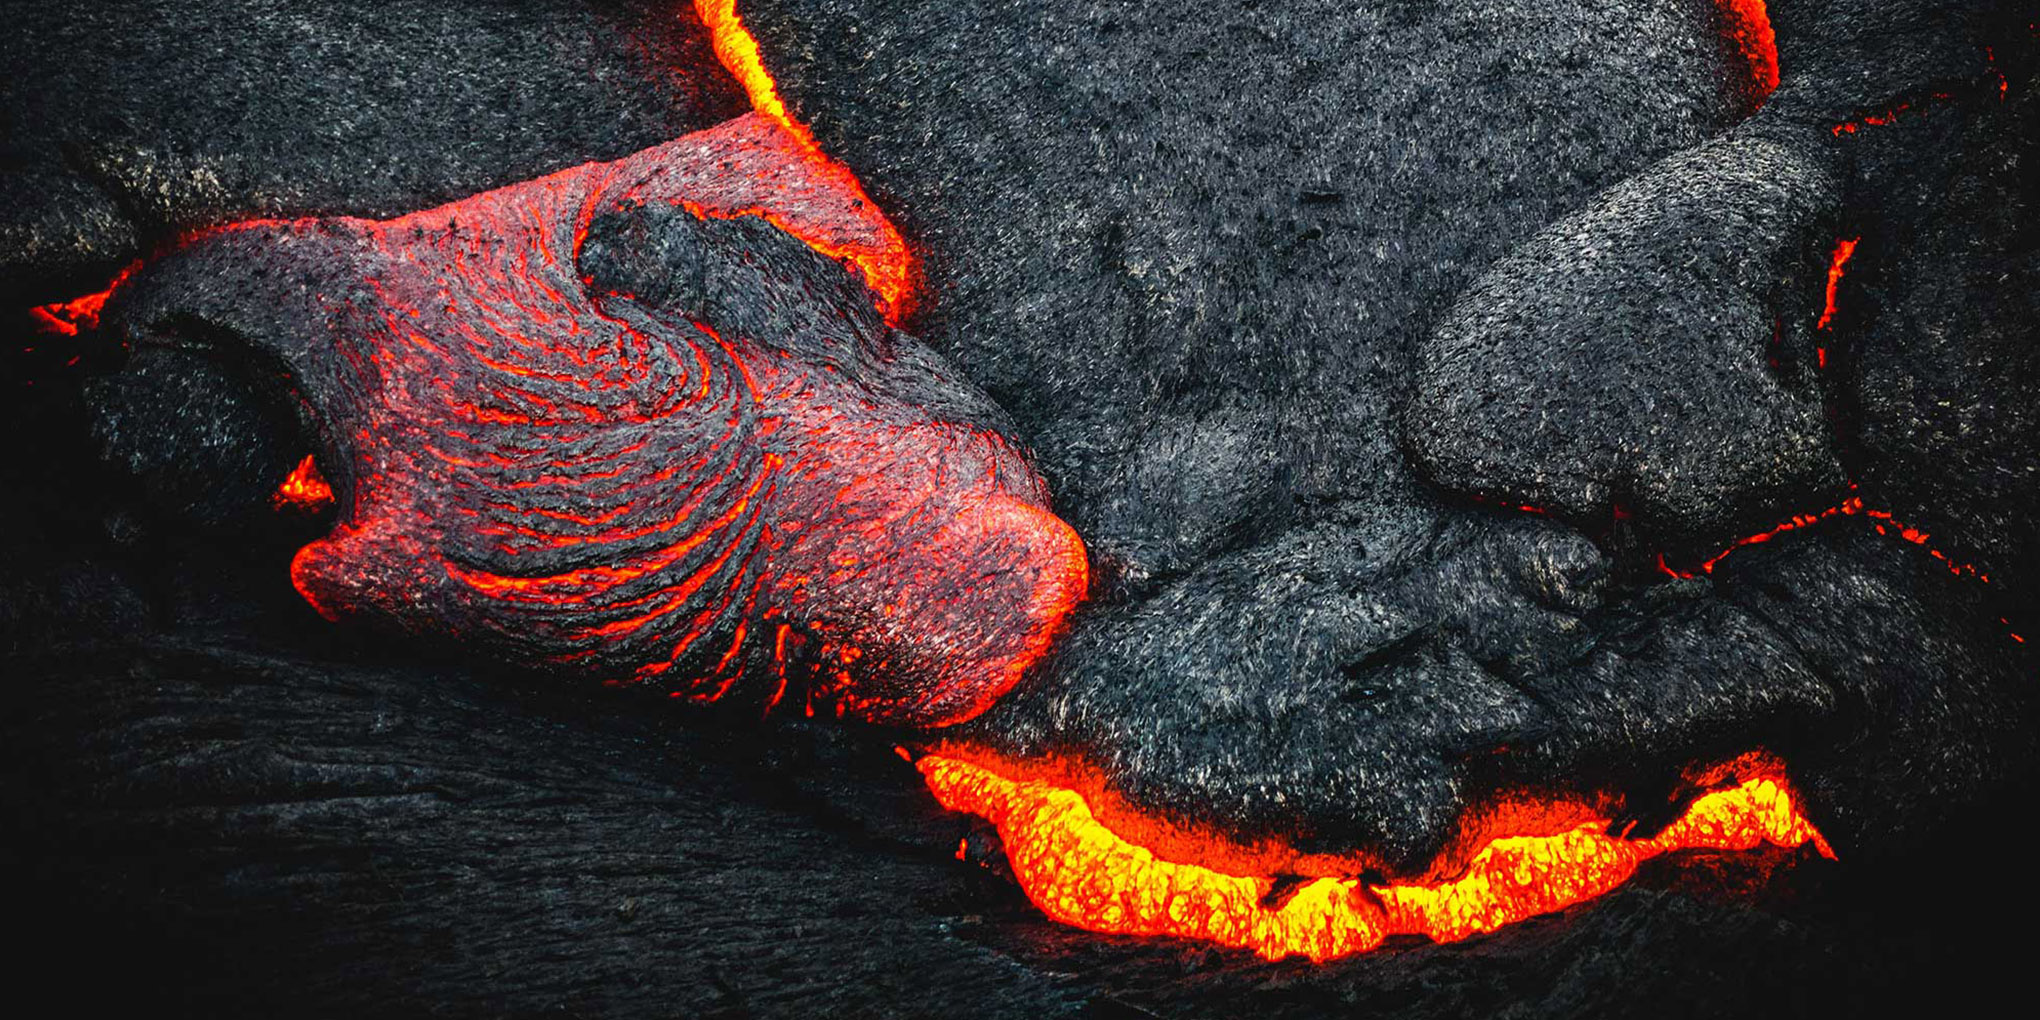 Predictive Analytics: Volcanic Activity Analyzed Through Moving Magma